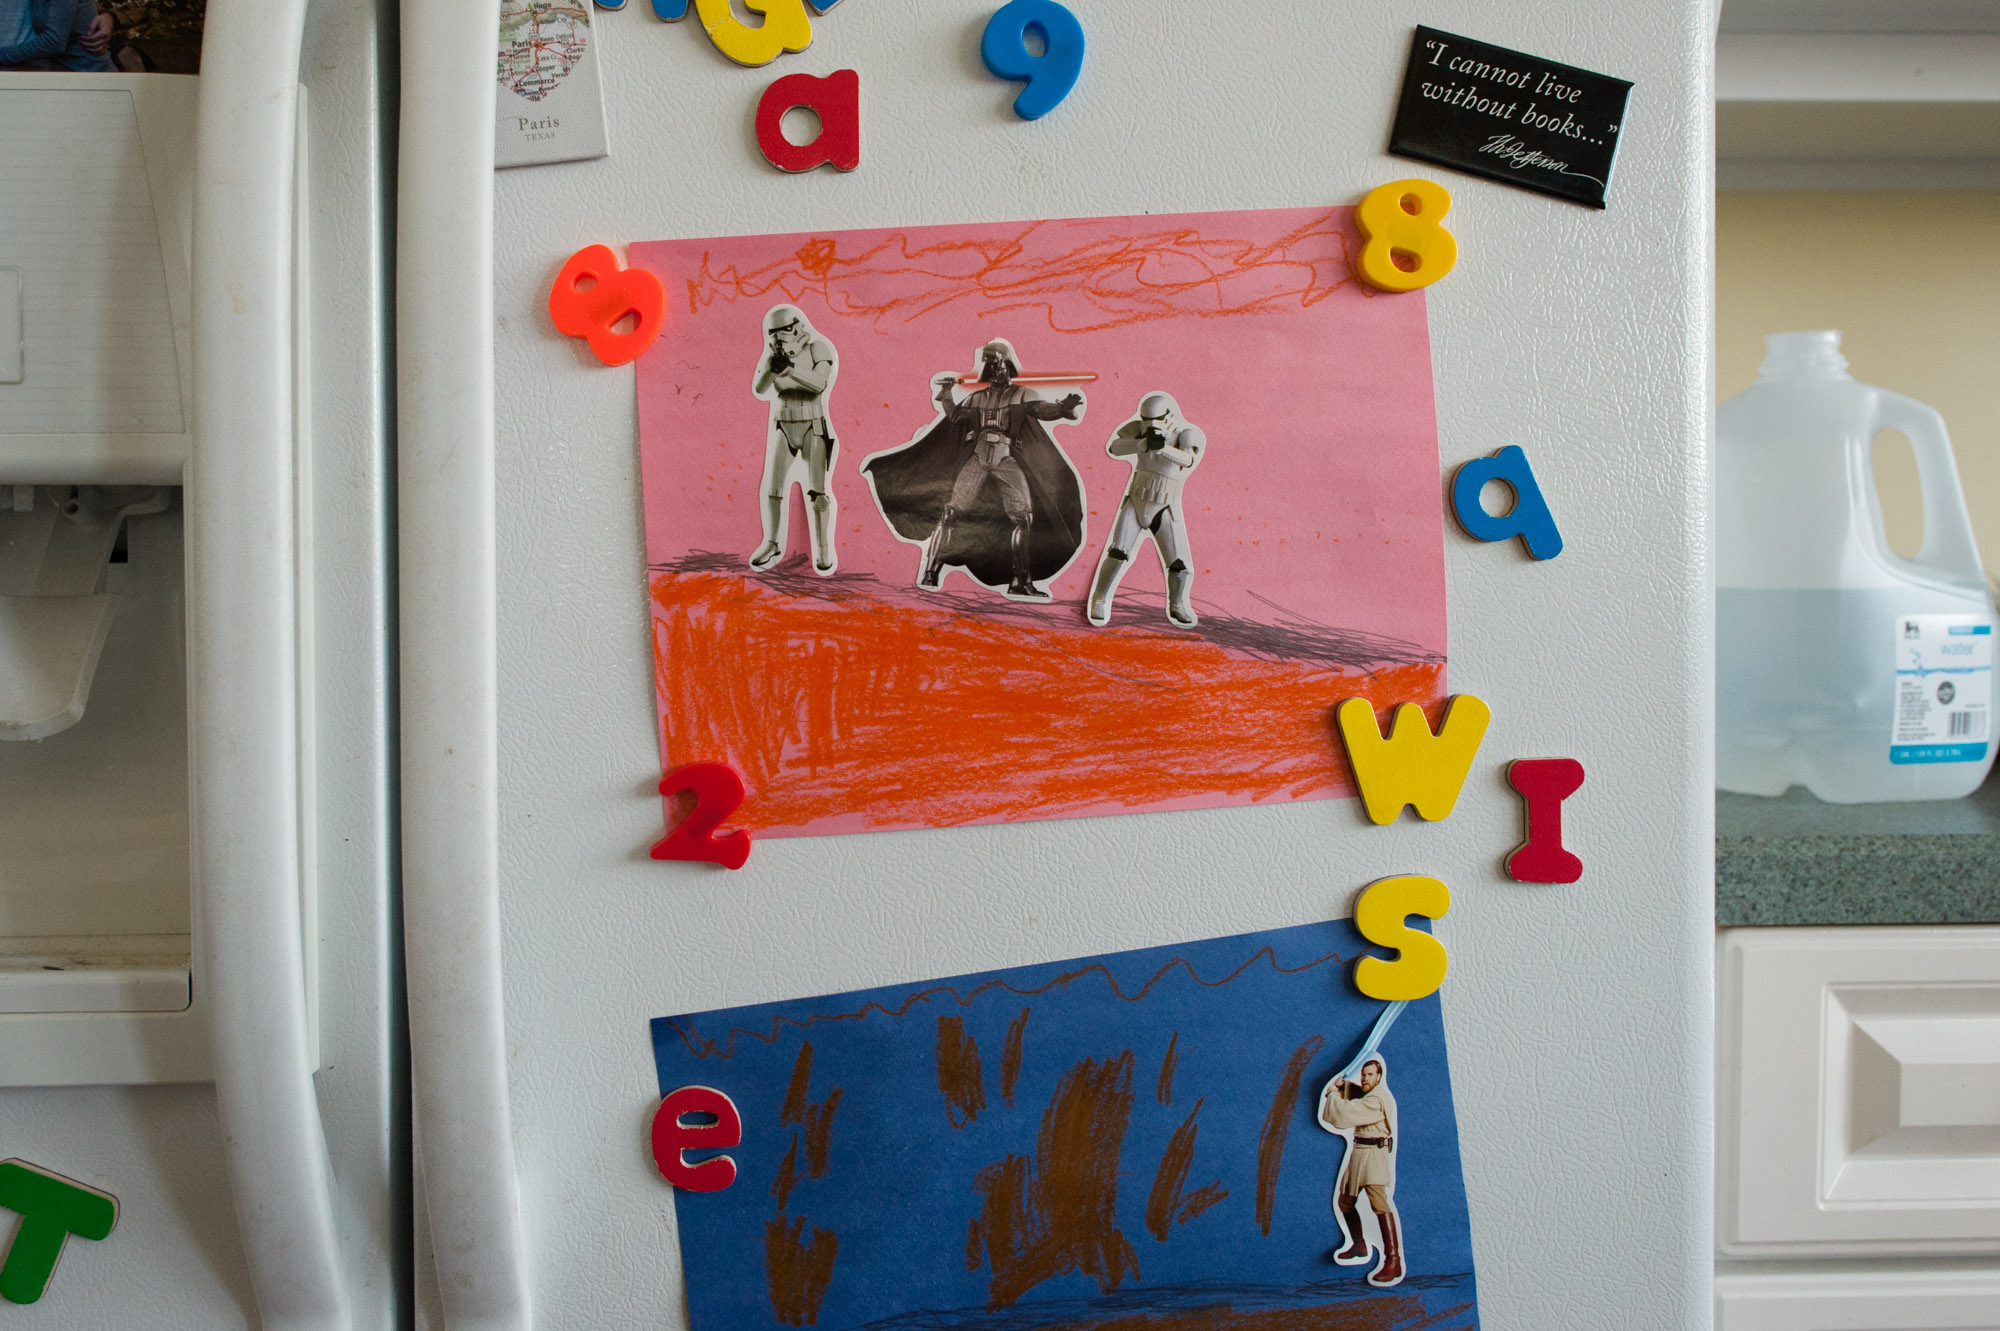 Star Wars drawings on fridge - documentary family photography